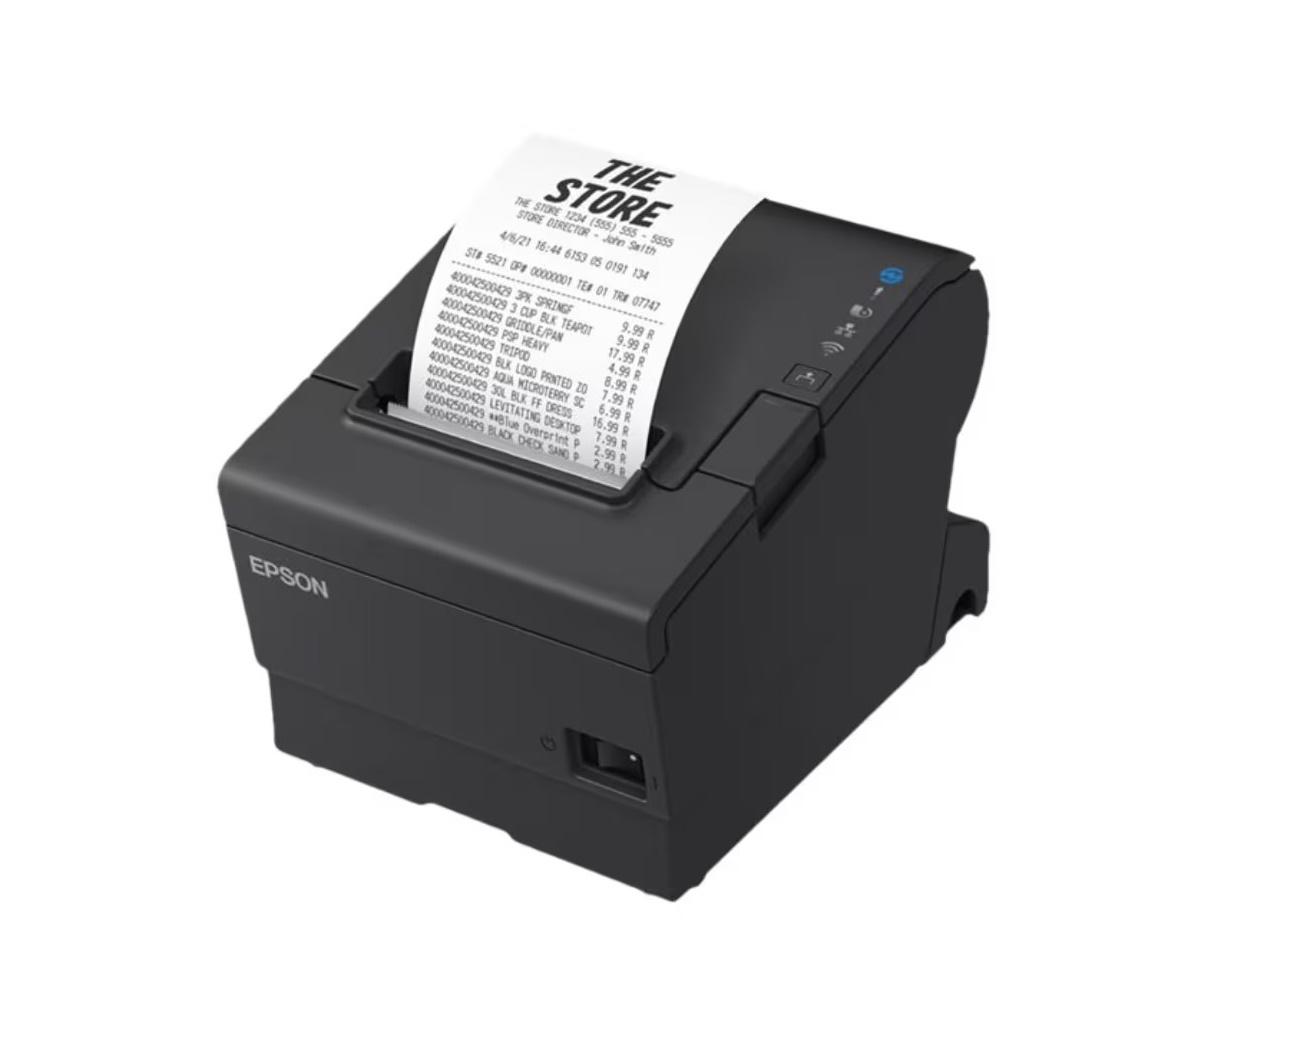 Epson TM-T88VII Thermal Usb Ethernet Autocutter Receipt Printer C31CJ57012